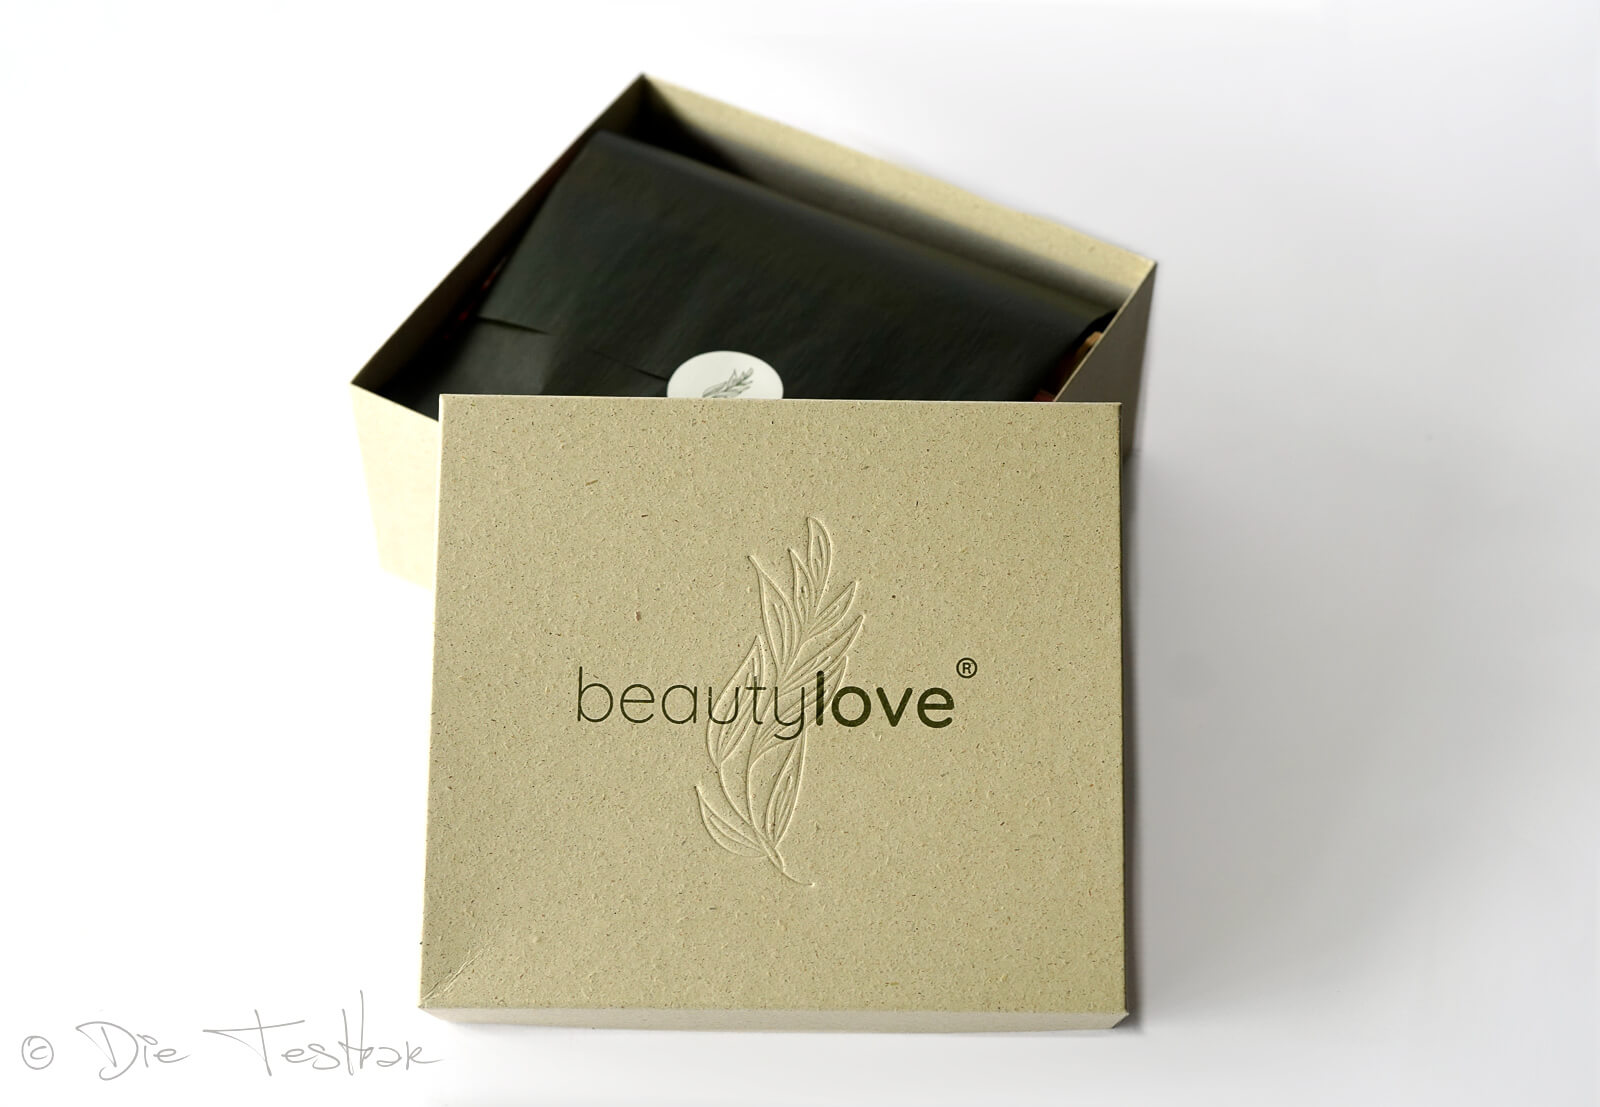  beautylove – The Natural Box im Mai/Juni 2021